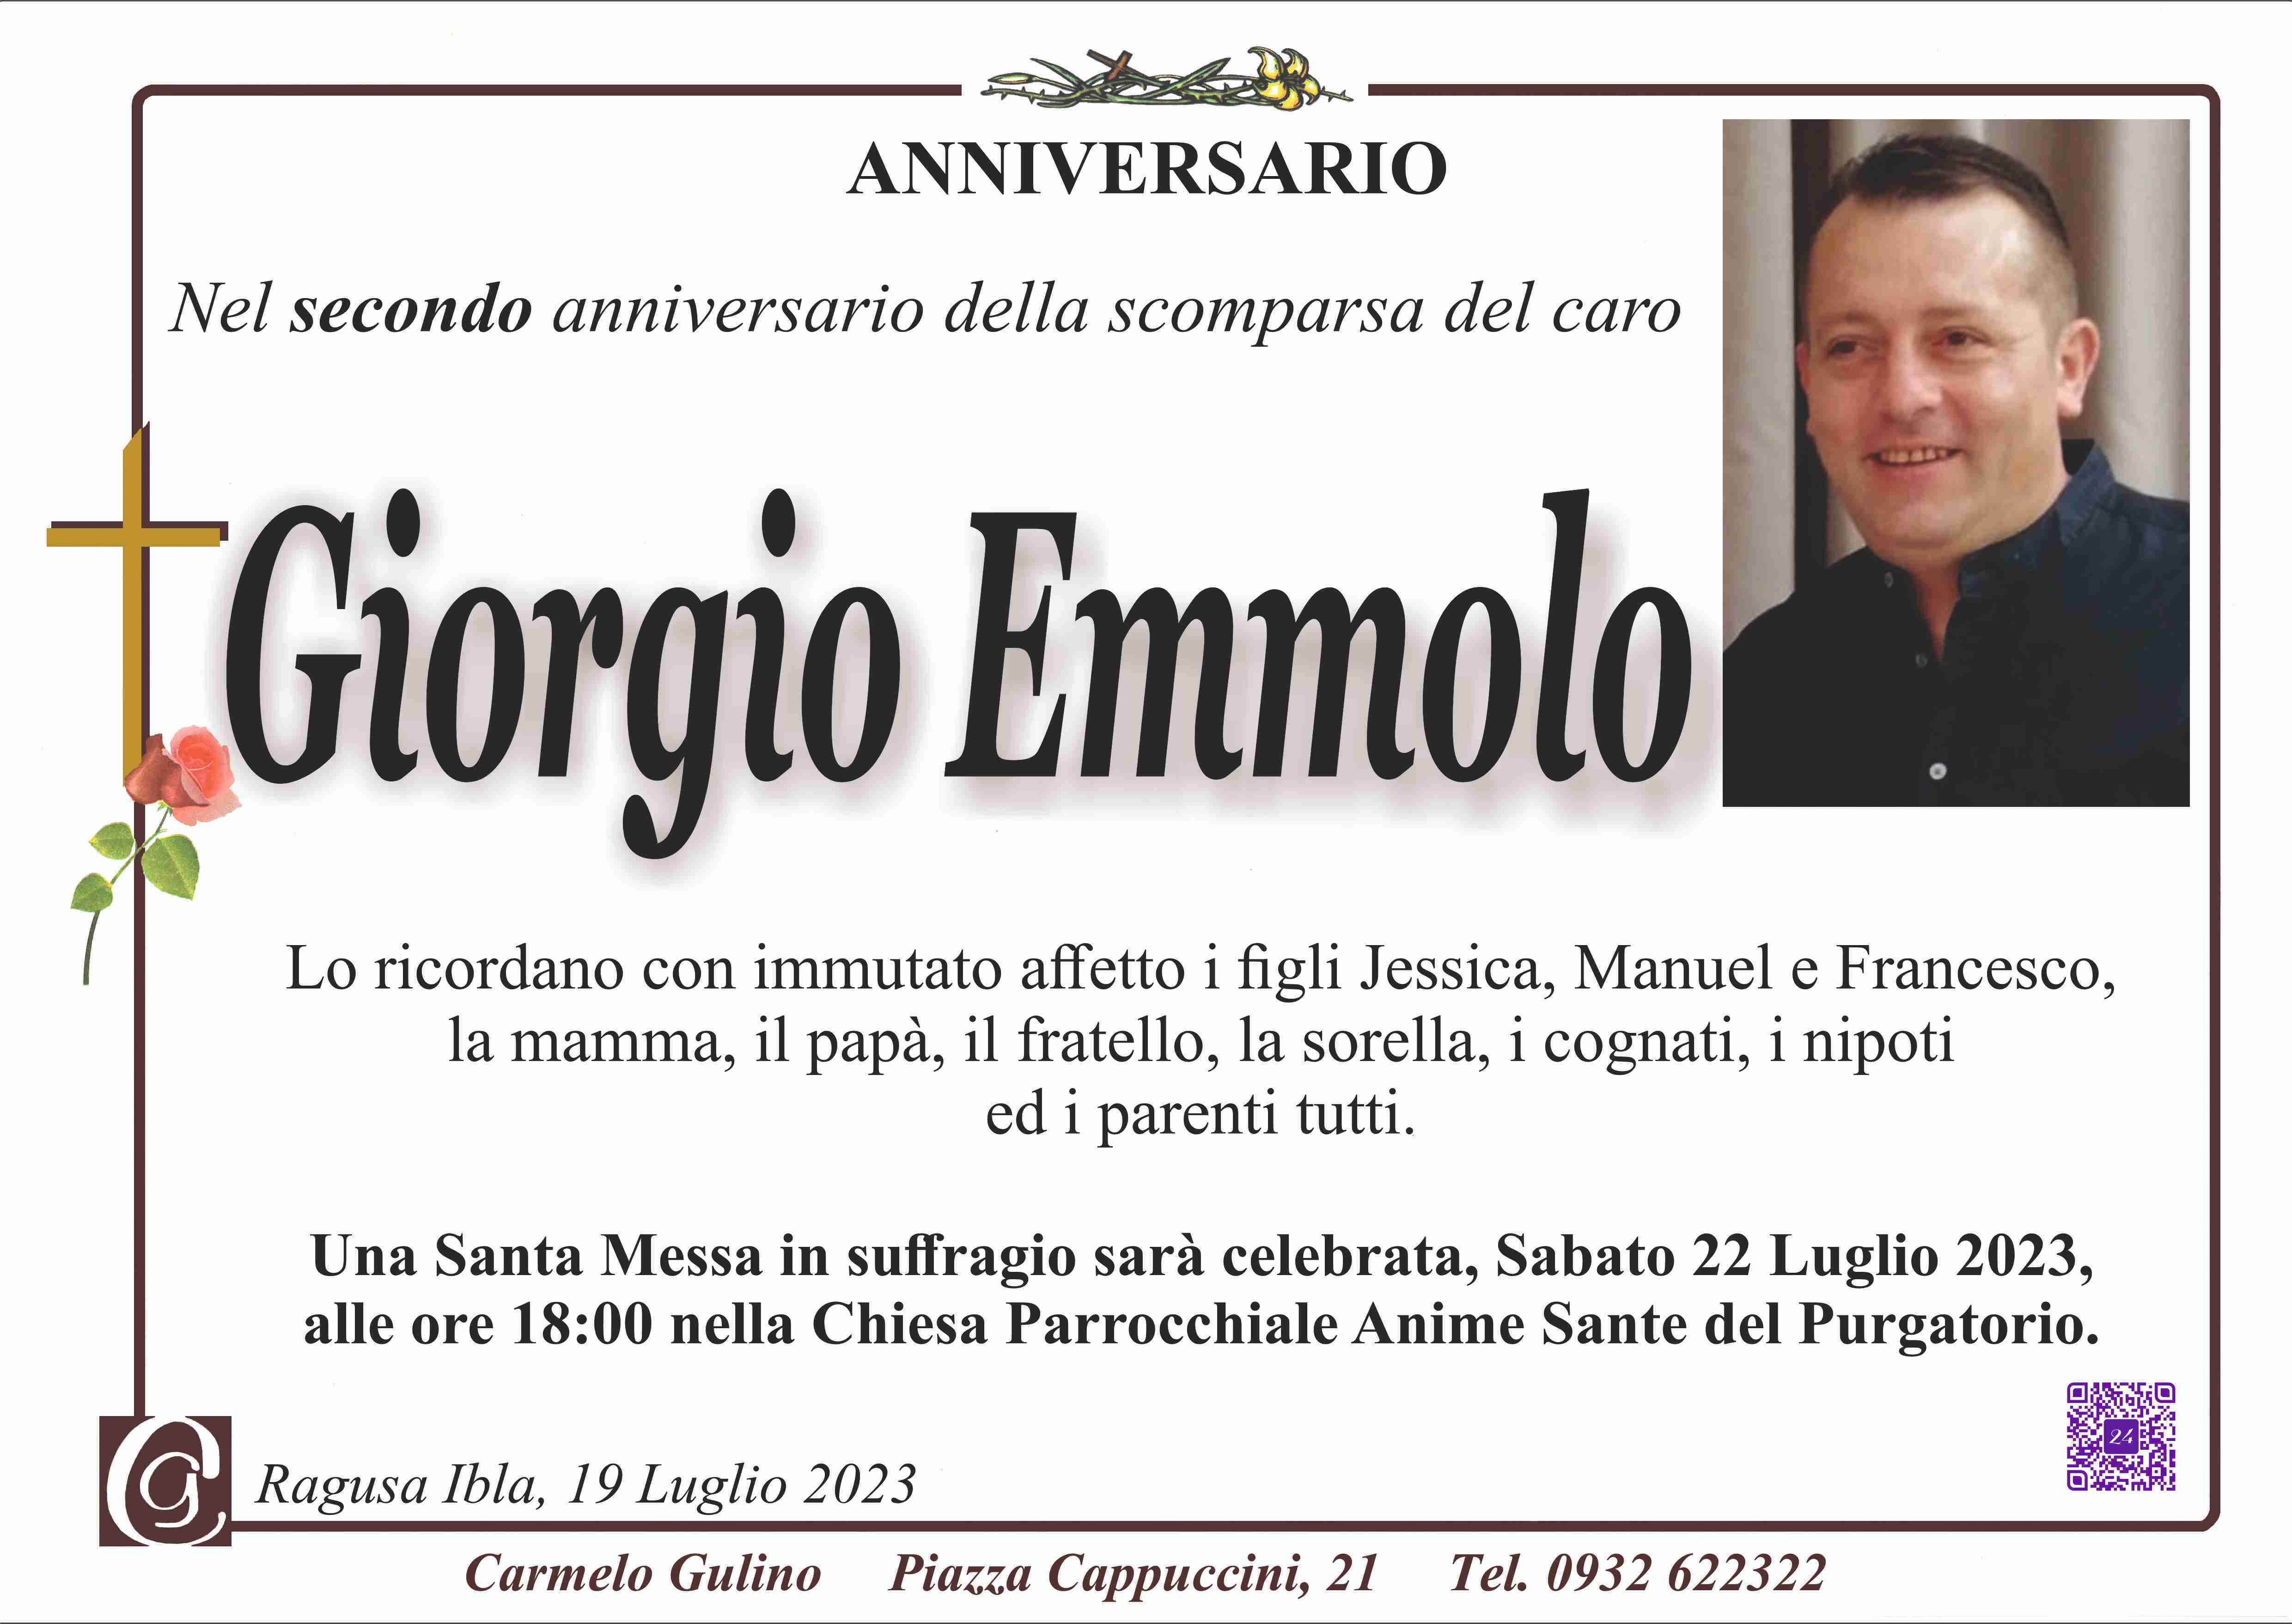 Giorgio Emmolo